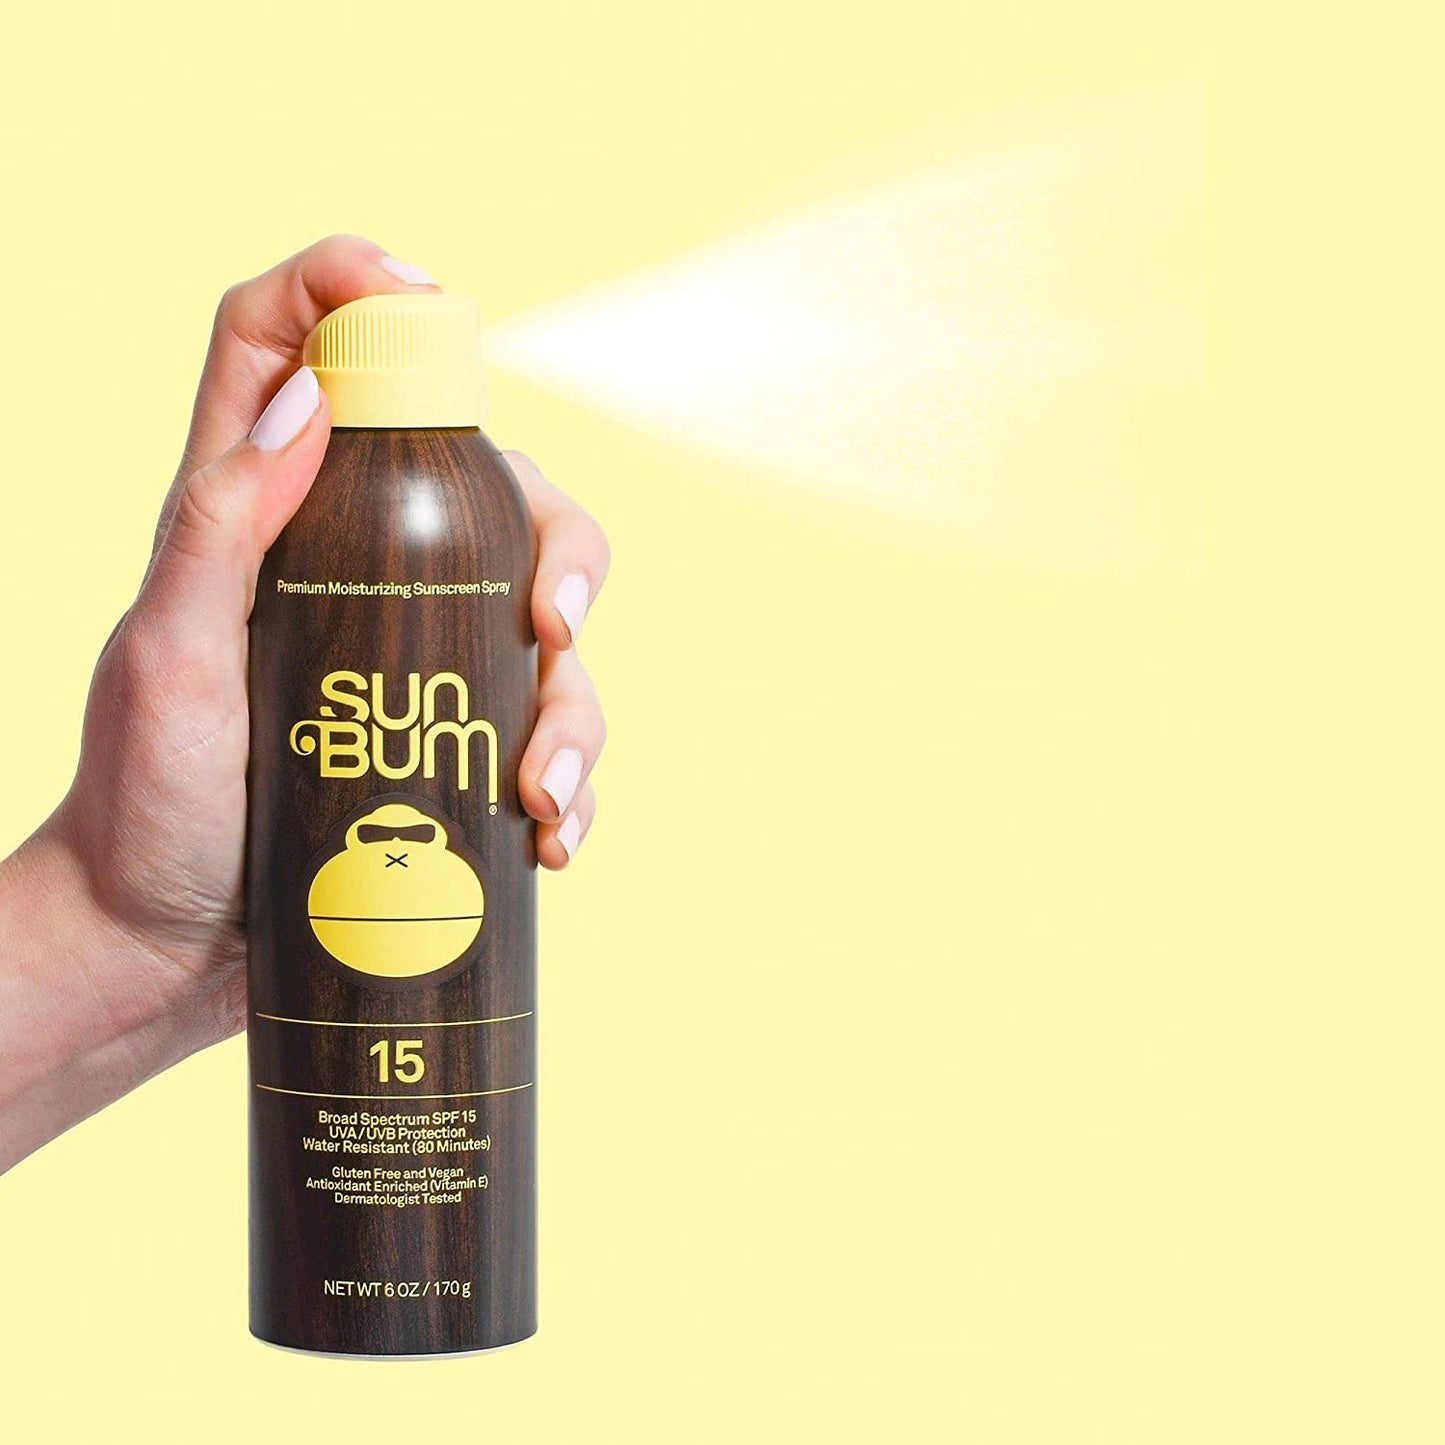 Sun Bum SPF 15 Premium Moisturizing Sunscreen Spray Gluten Free & Vegan 6 oz/ 170 gSun Bum SPF 15 Premium Moisturizing Sunscreen Spray Gluten Free & Vegan 6 oz/ 170 g